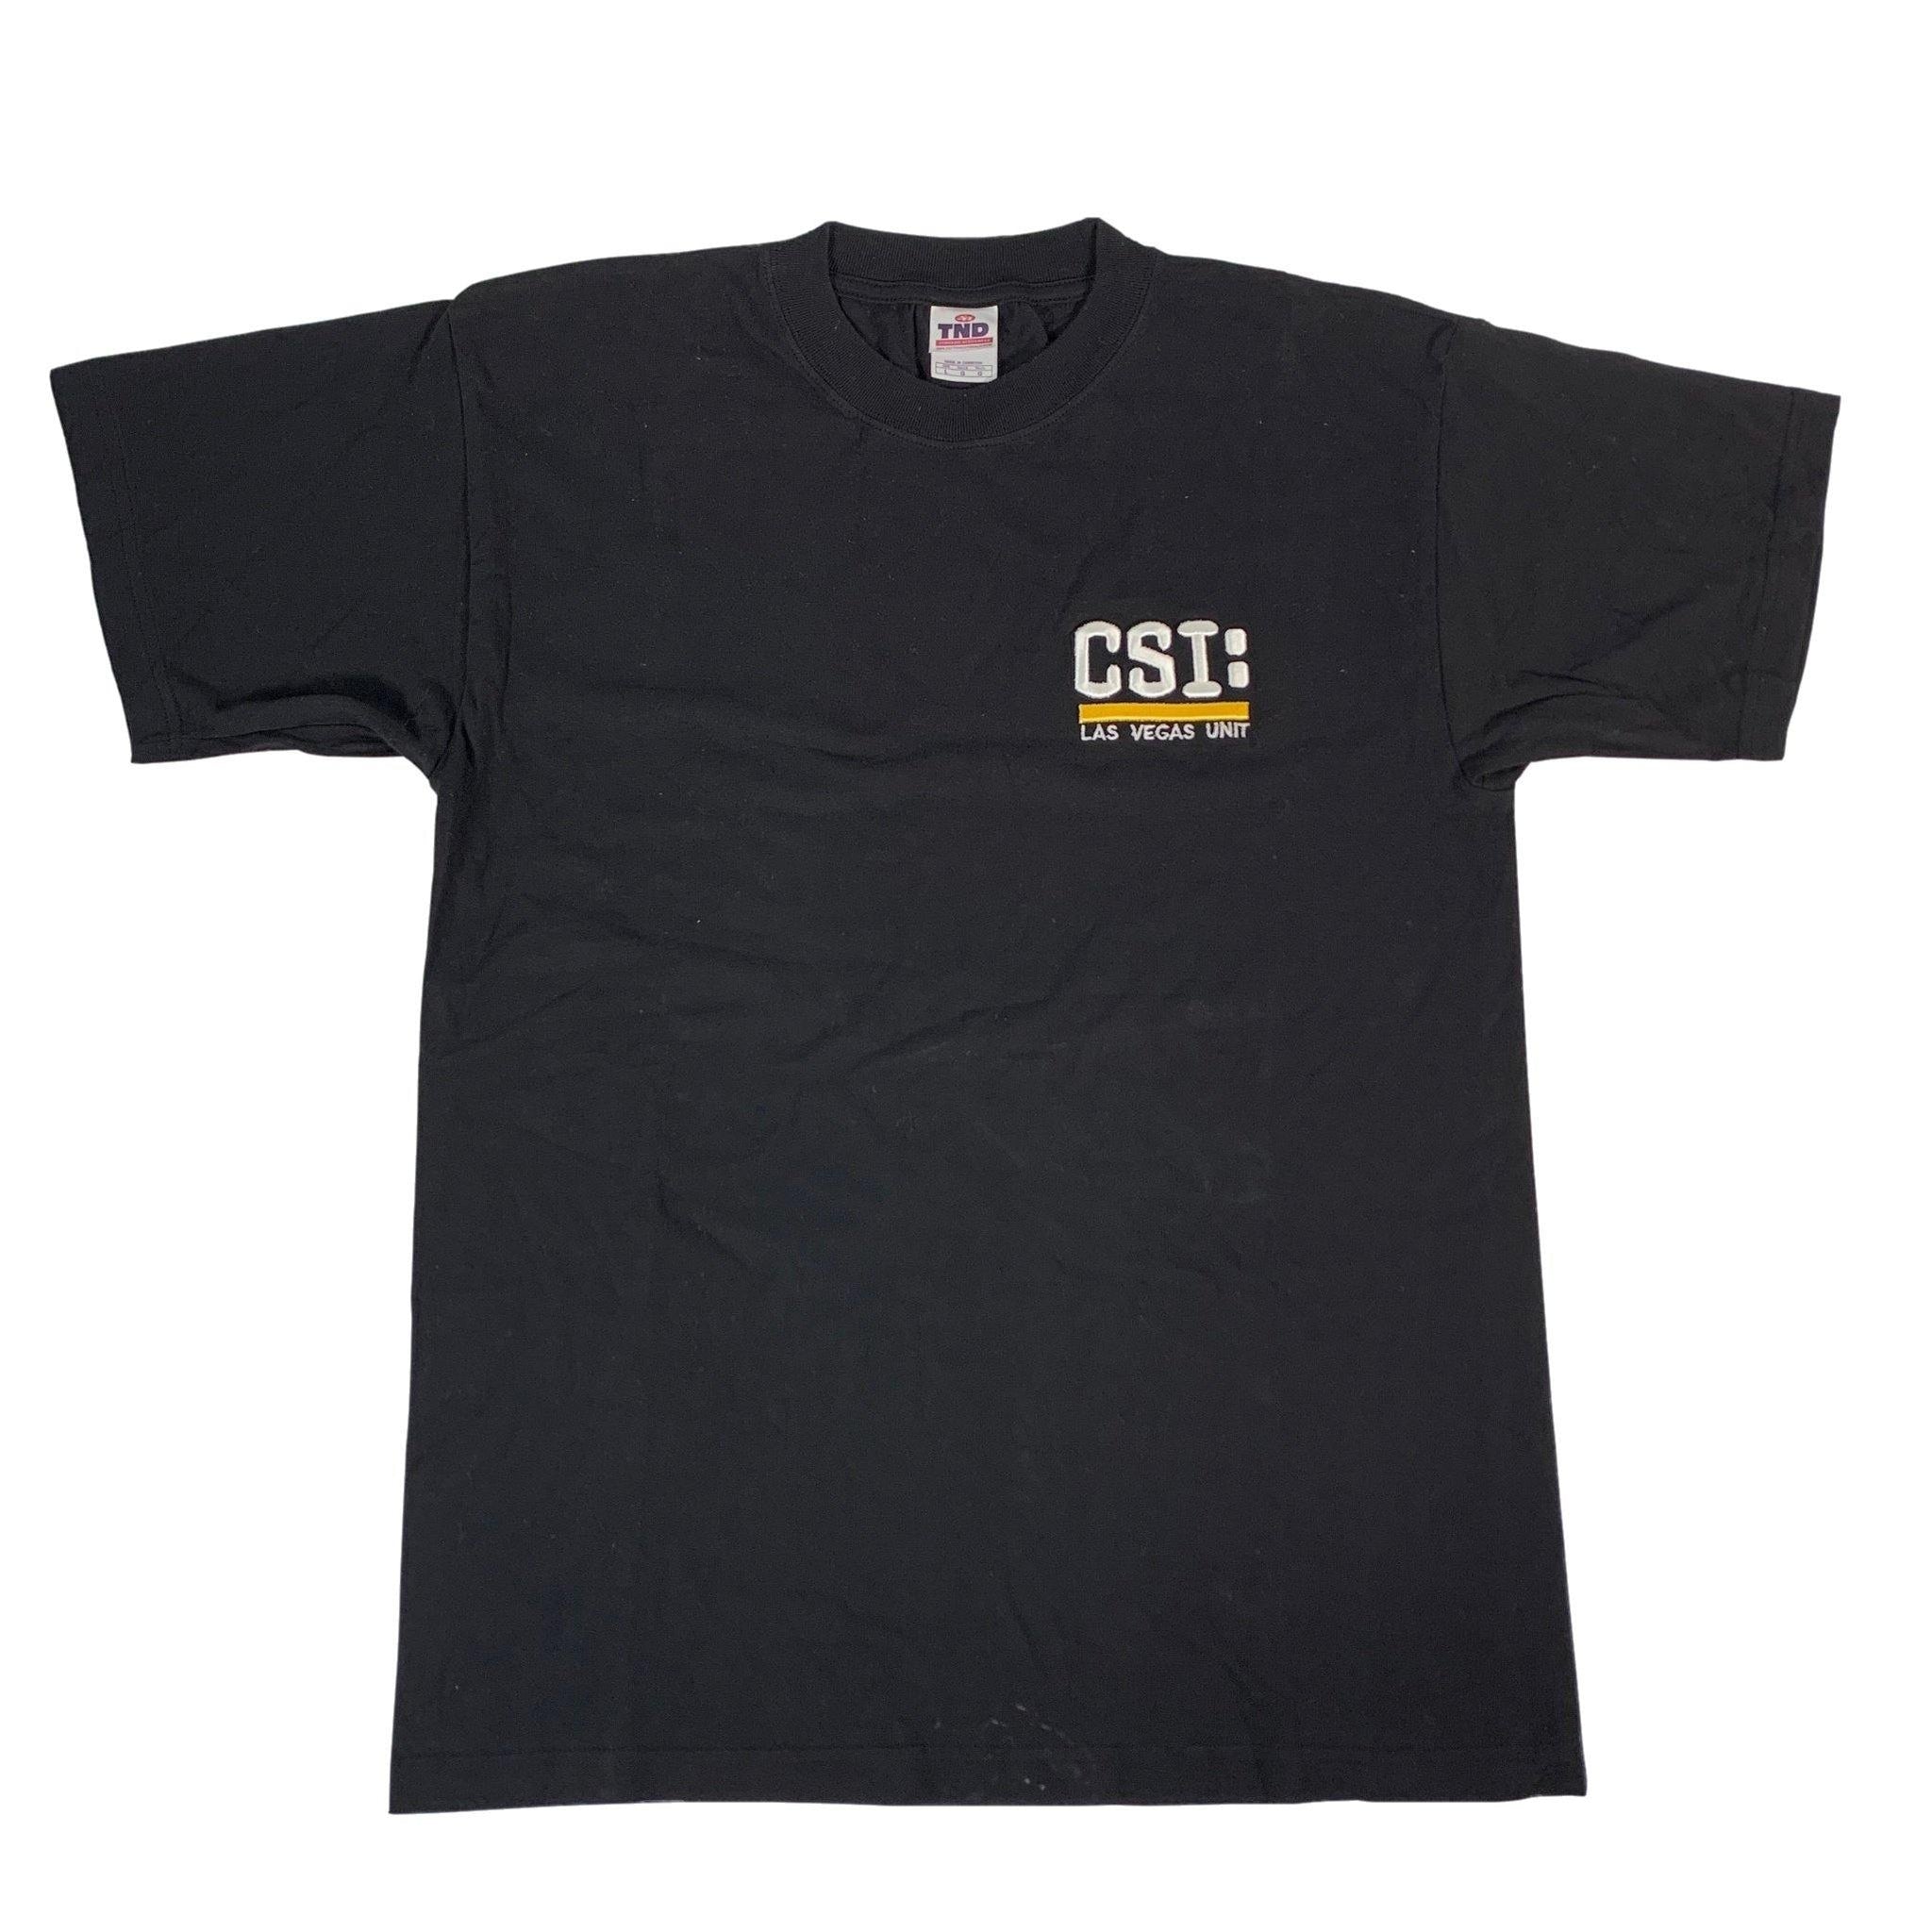 CSI: Crime Scene Investigation Las Vegas Unit Logo Embroidered Hat